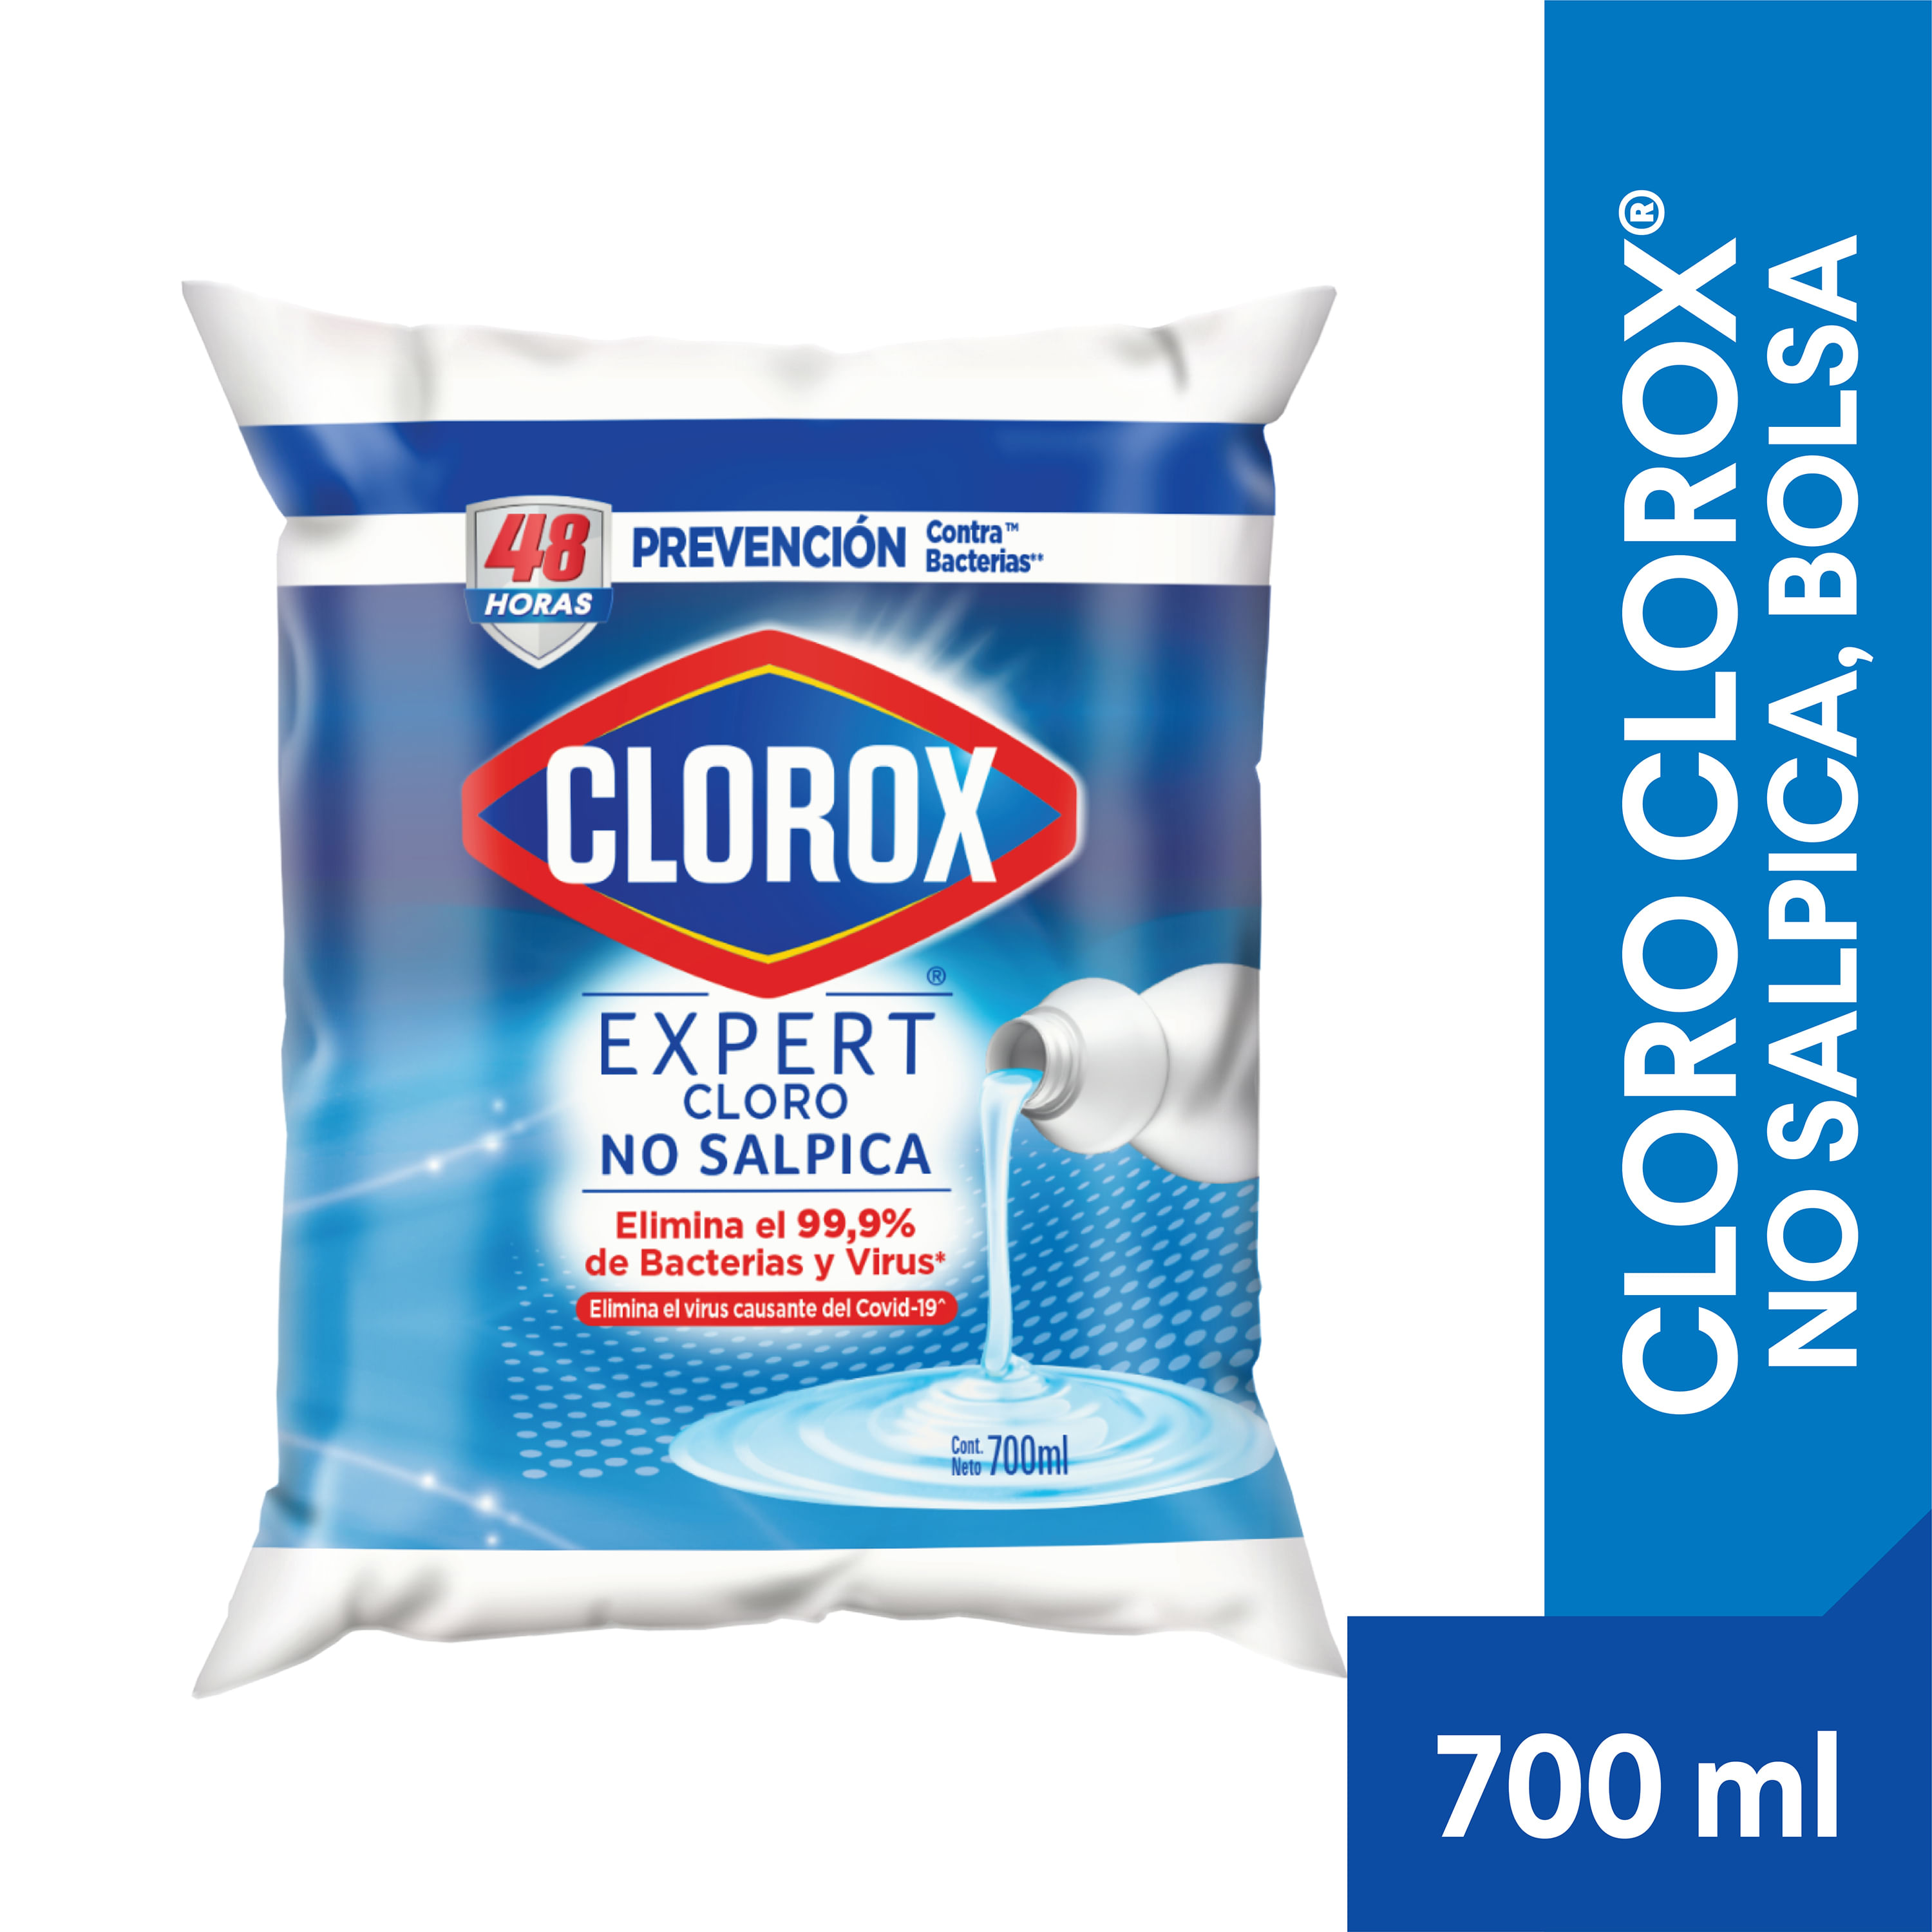 Cloro-Marca-Clorox-No-Salpica-Bolsa-Prevenci-n-Contra-Bacterias-700ml-1-31507